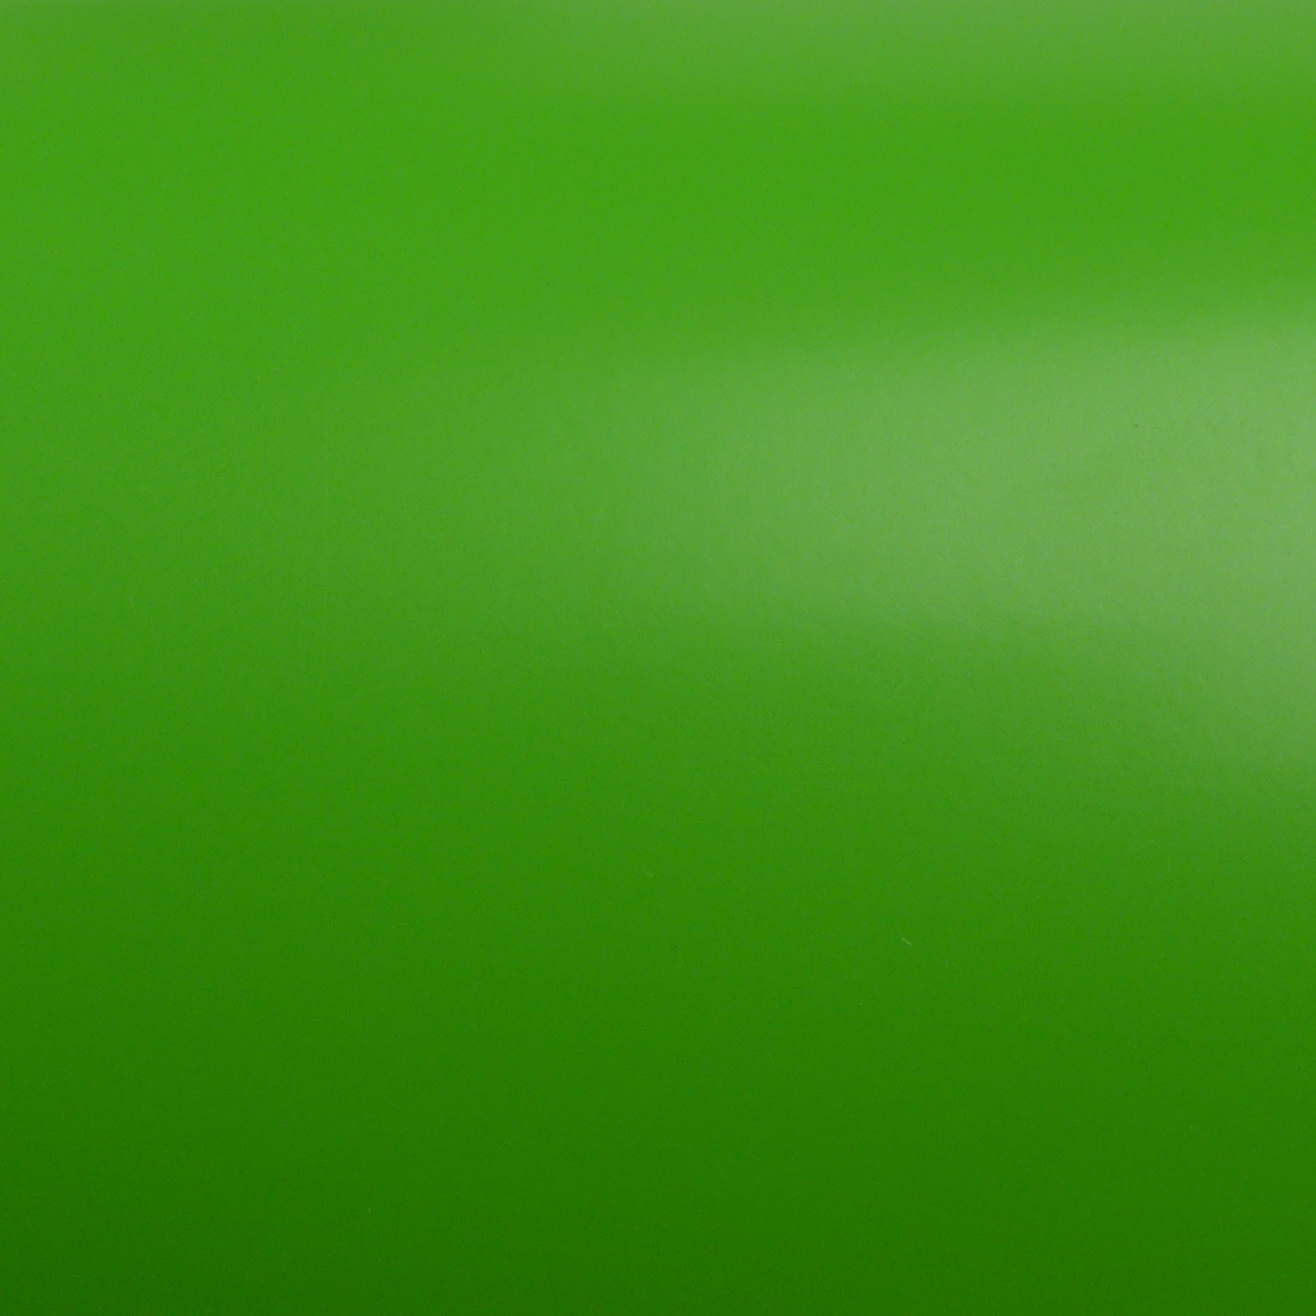 3M 2080 S196 apple green wrapping bilindpakning grøn satin folie carl jensen